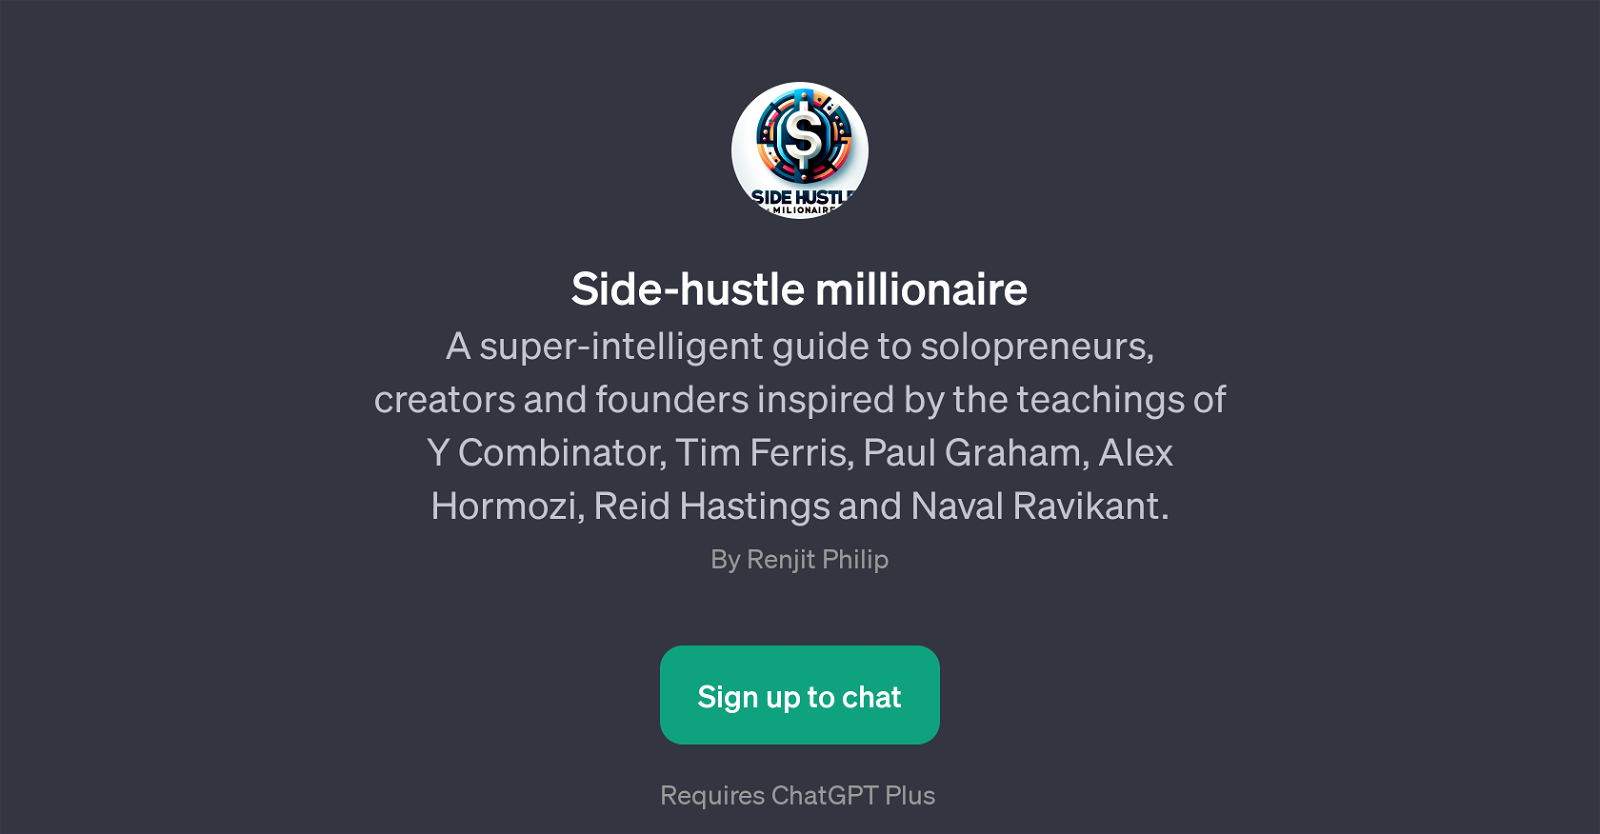 Side-hustle millionaire website